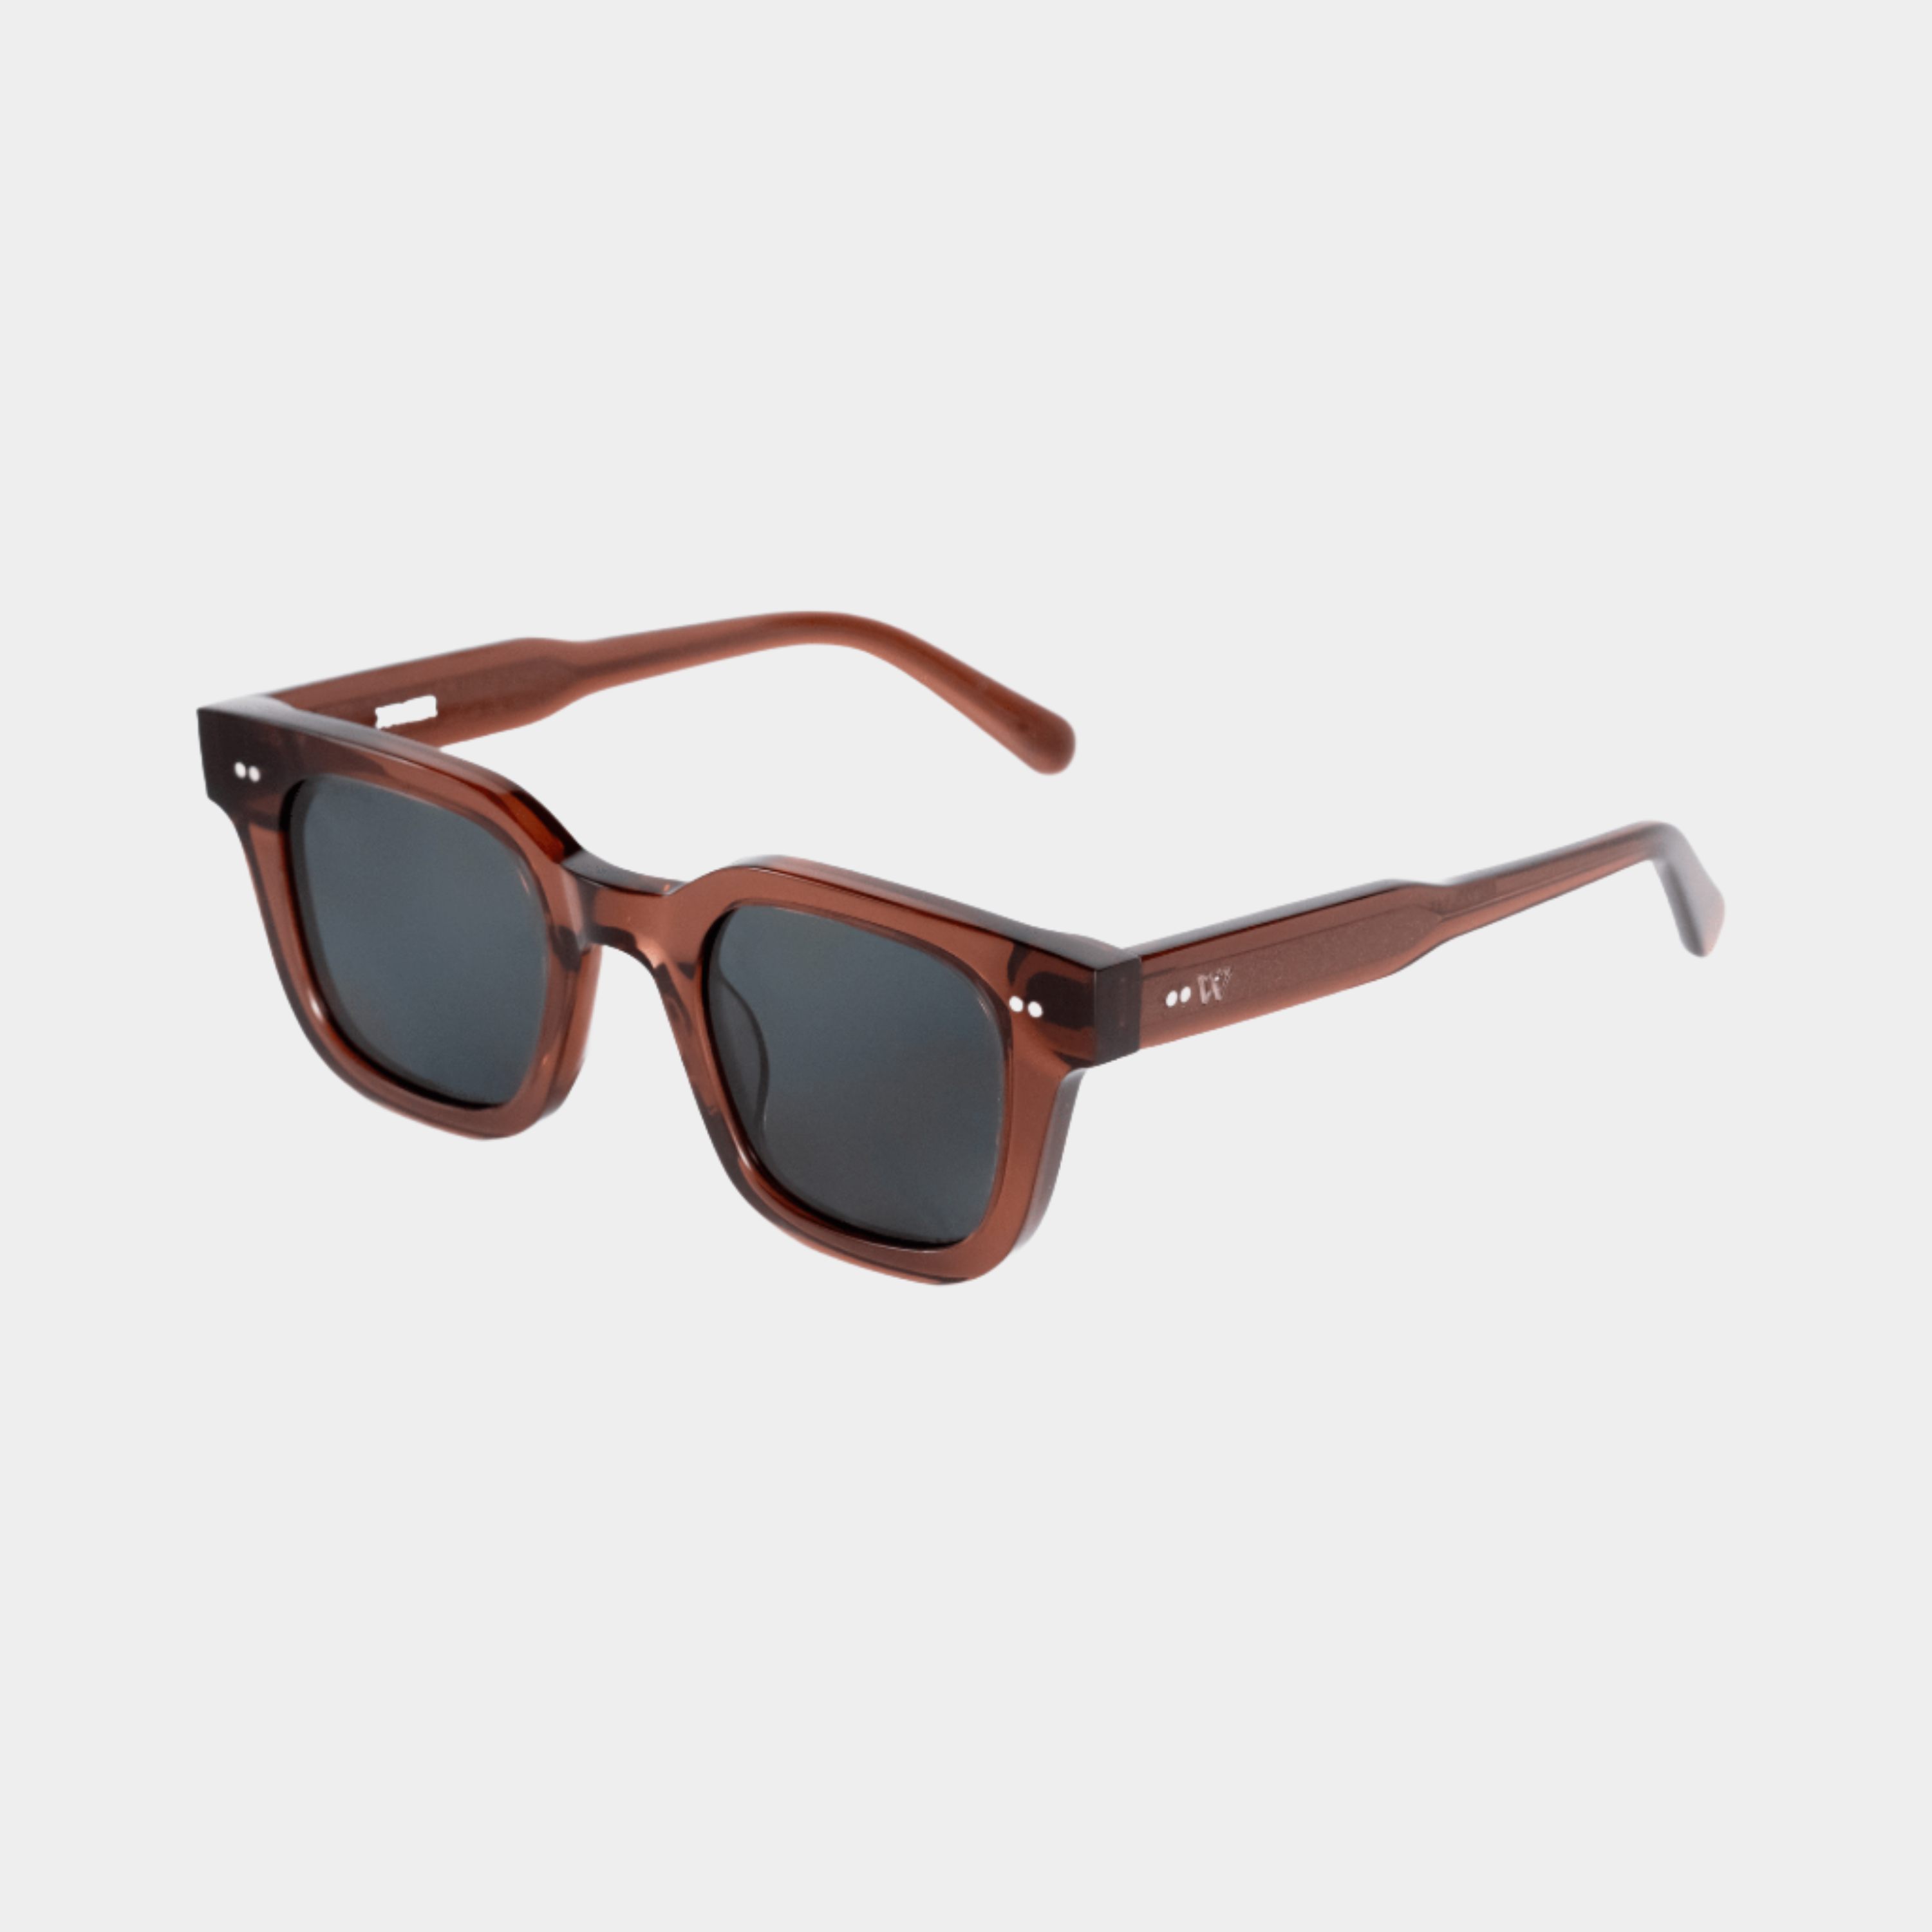 Walter Hill Sunglasses Brown / Standard / Polarized Cat.3 XAVIER - Brown